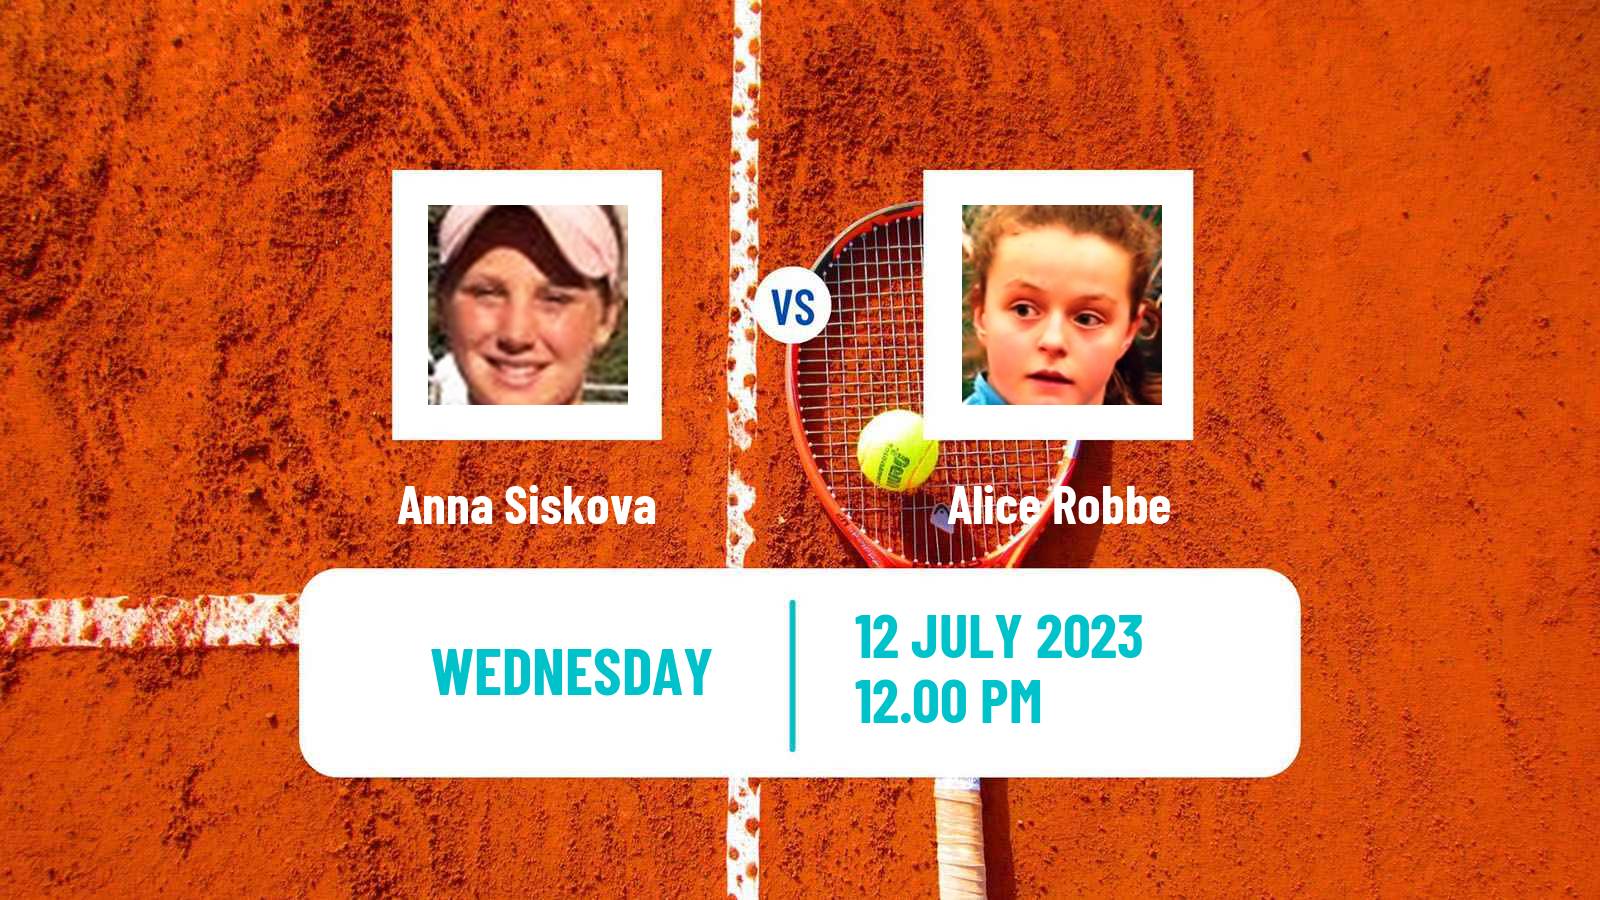 Tennis ITF W60 Amstelveen Women Anna Siskova - Alice Robbe